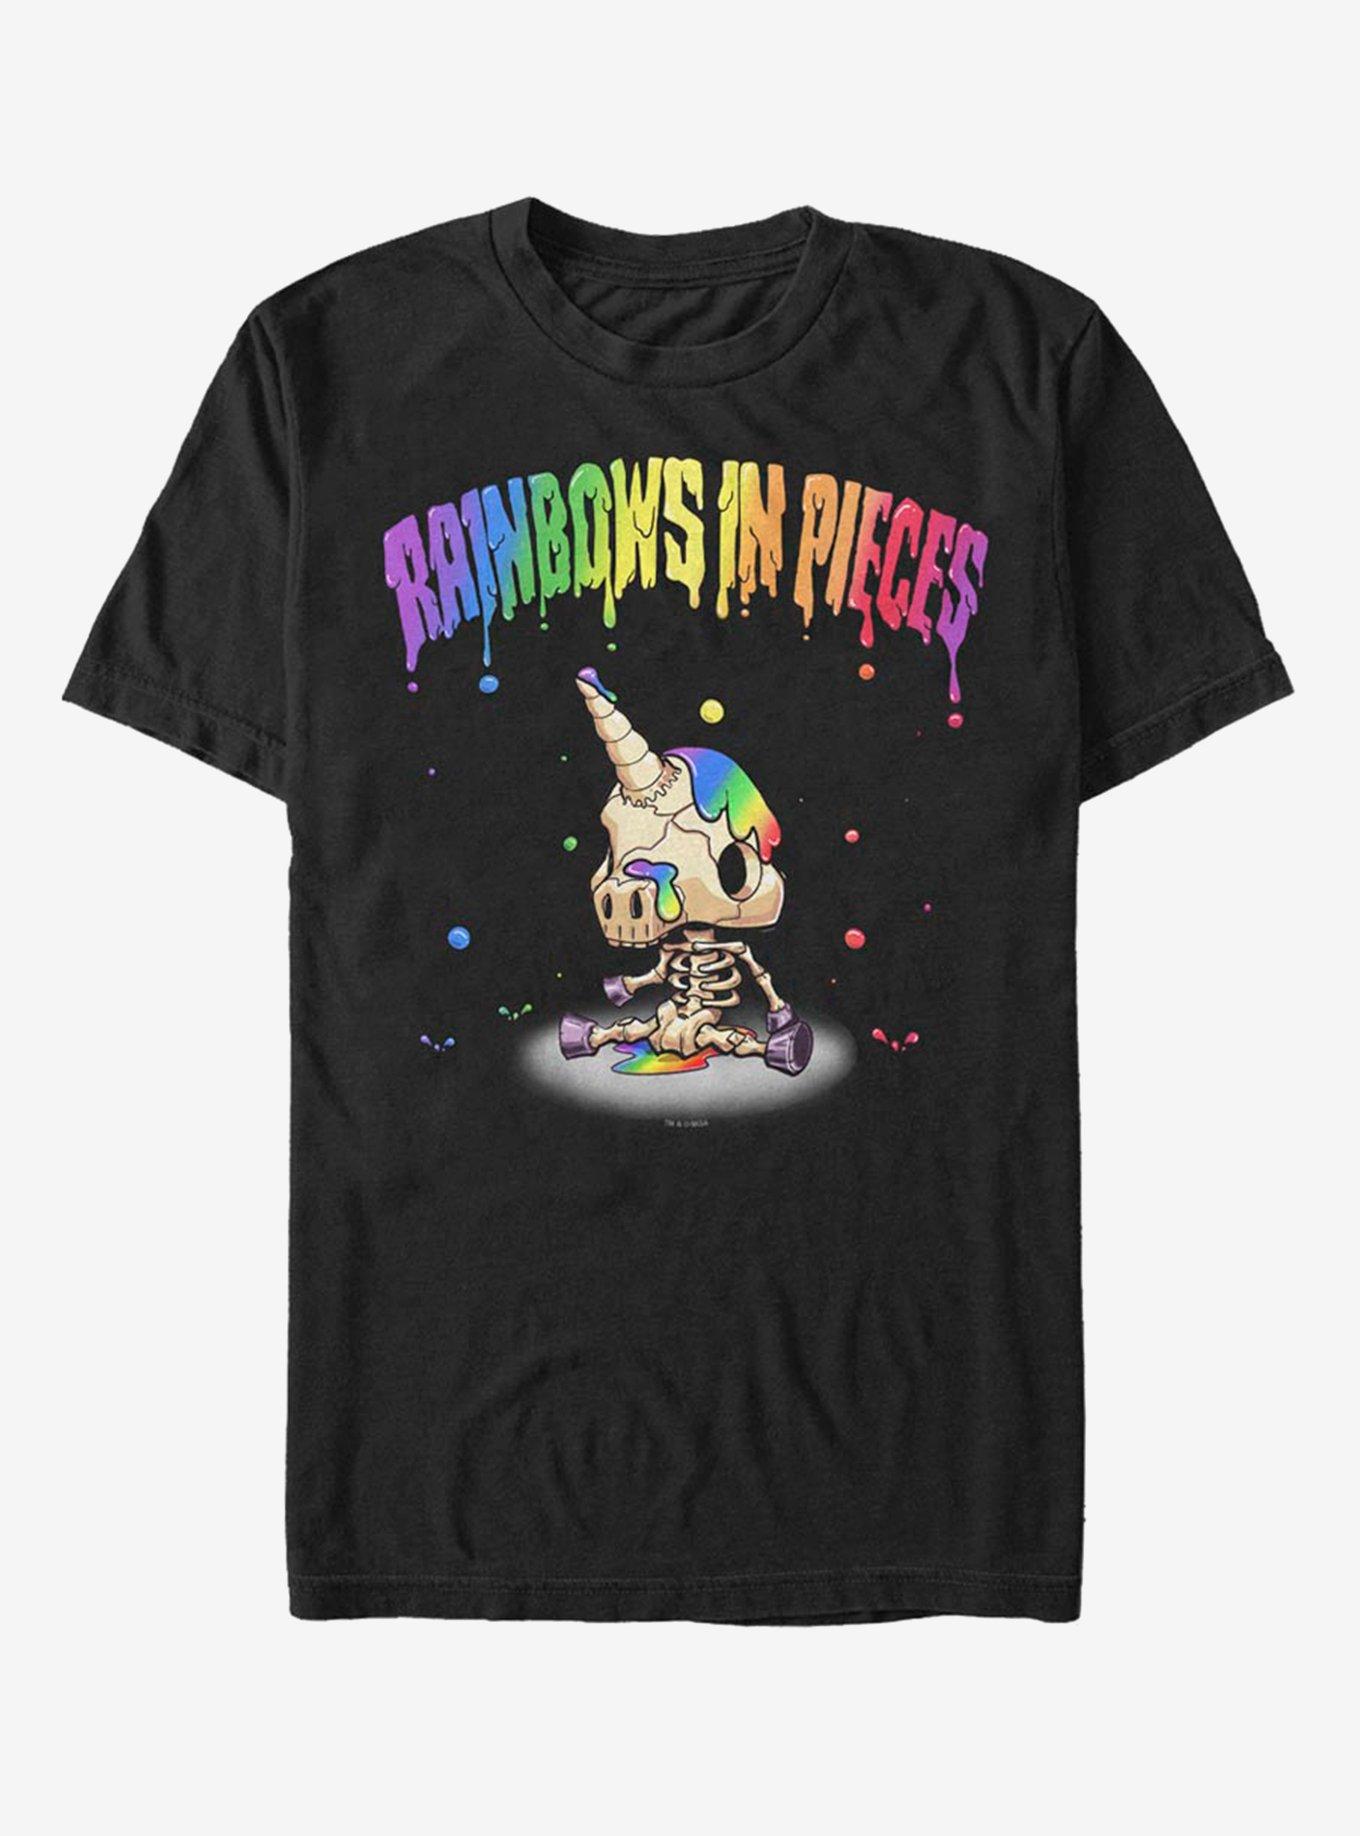 R.I.P Rainbows In Pieces RIP Skull Drip T-Shirt, BLACK, hi-res